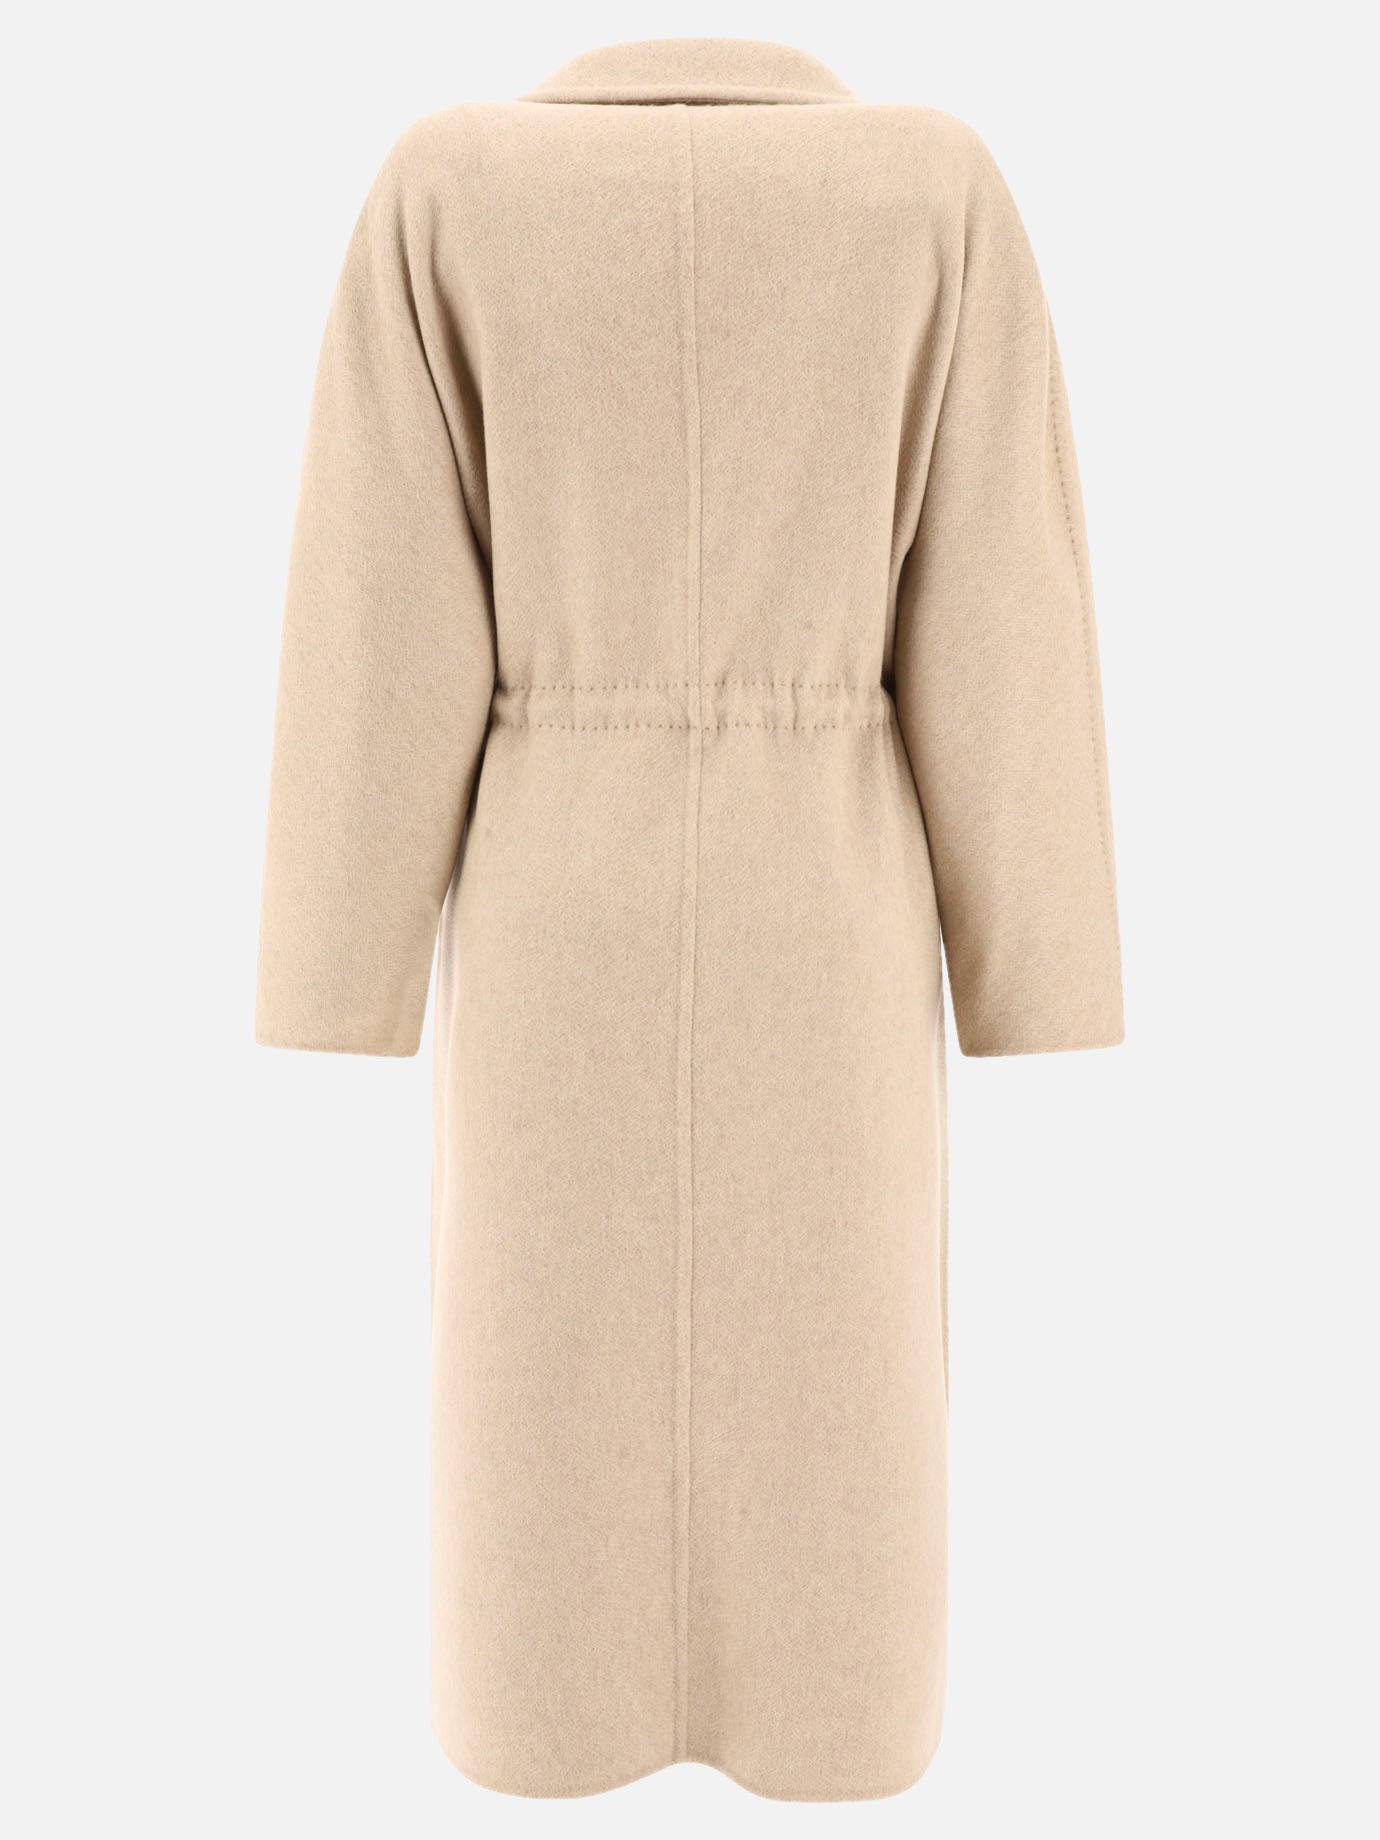 "Bertone" oversize cashmere coat